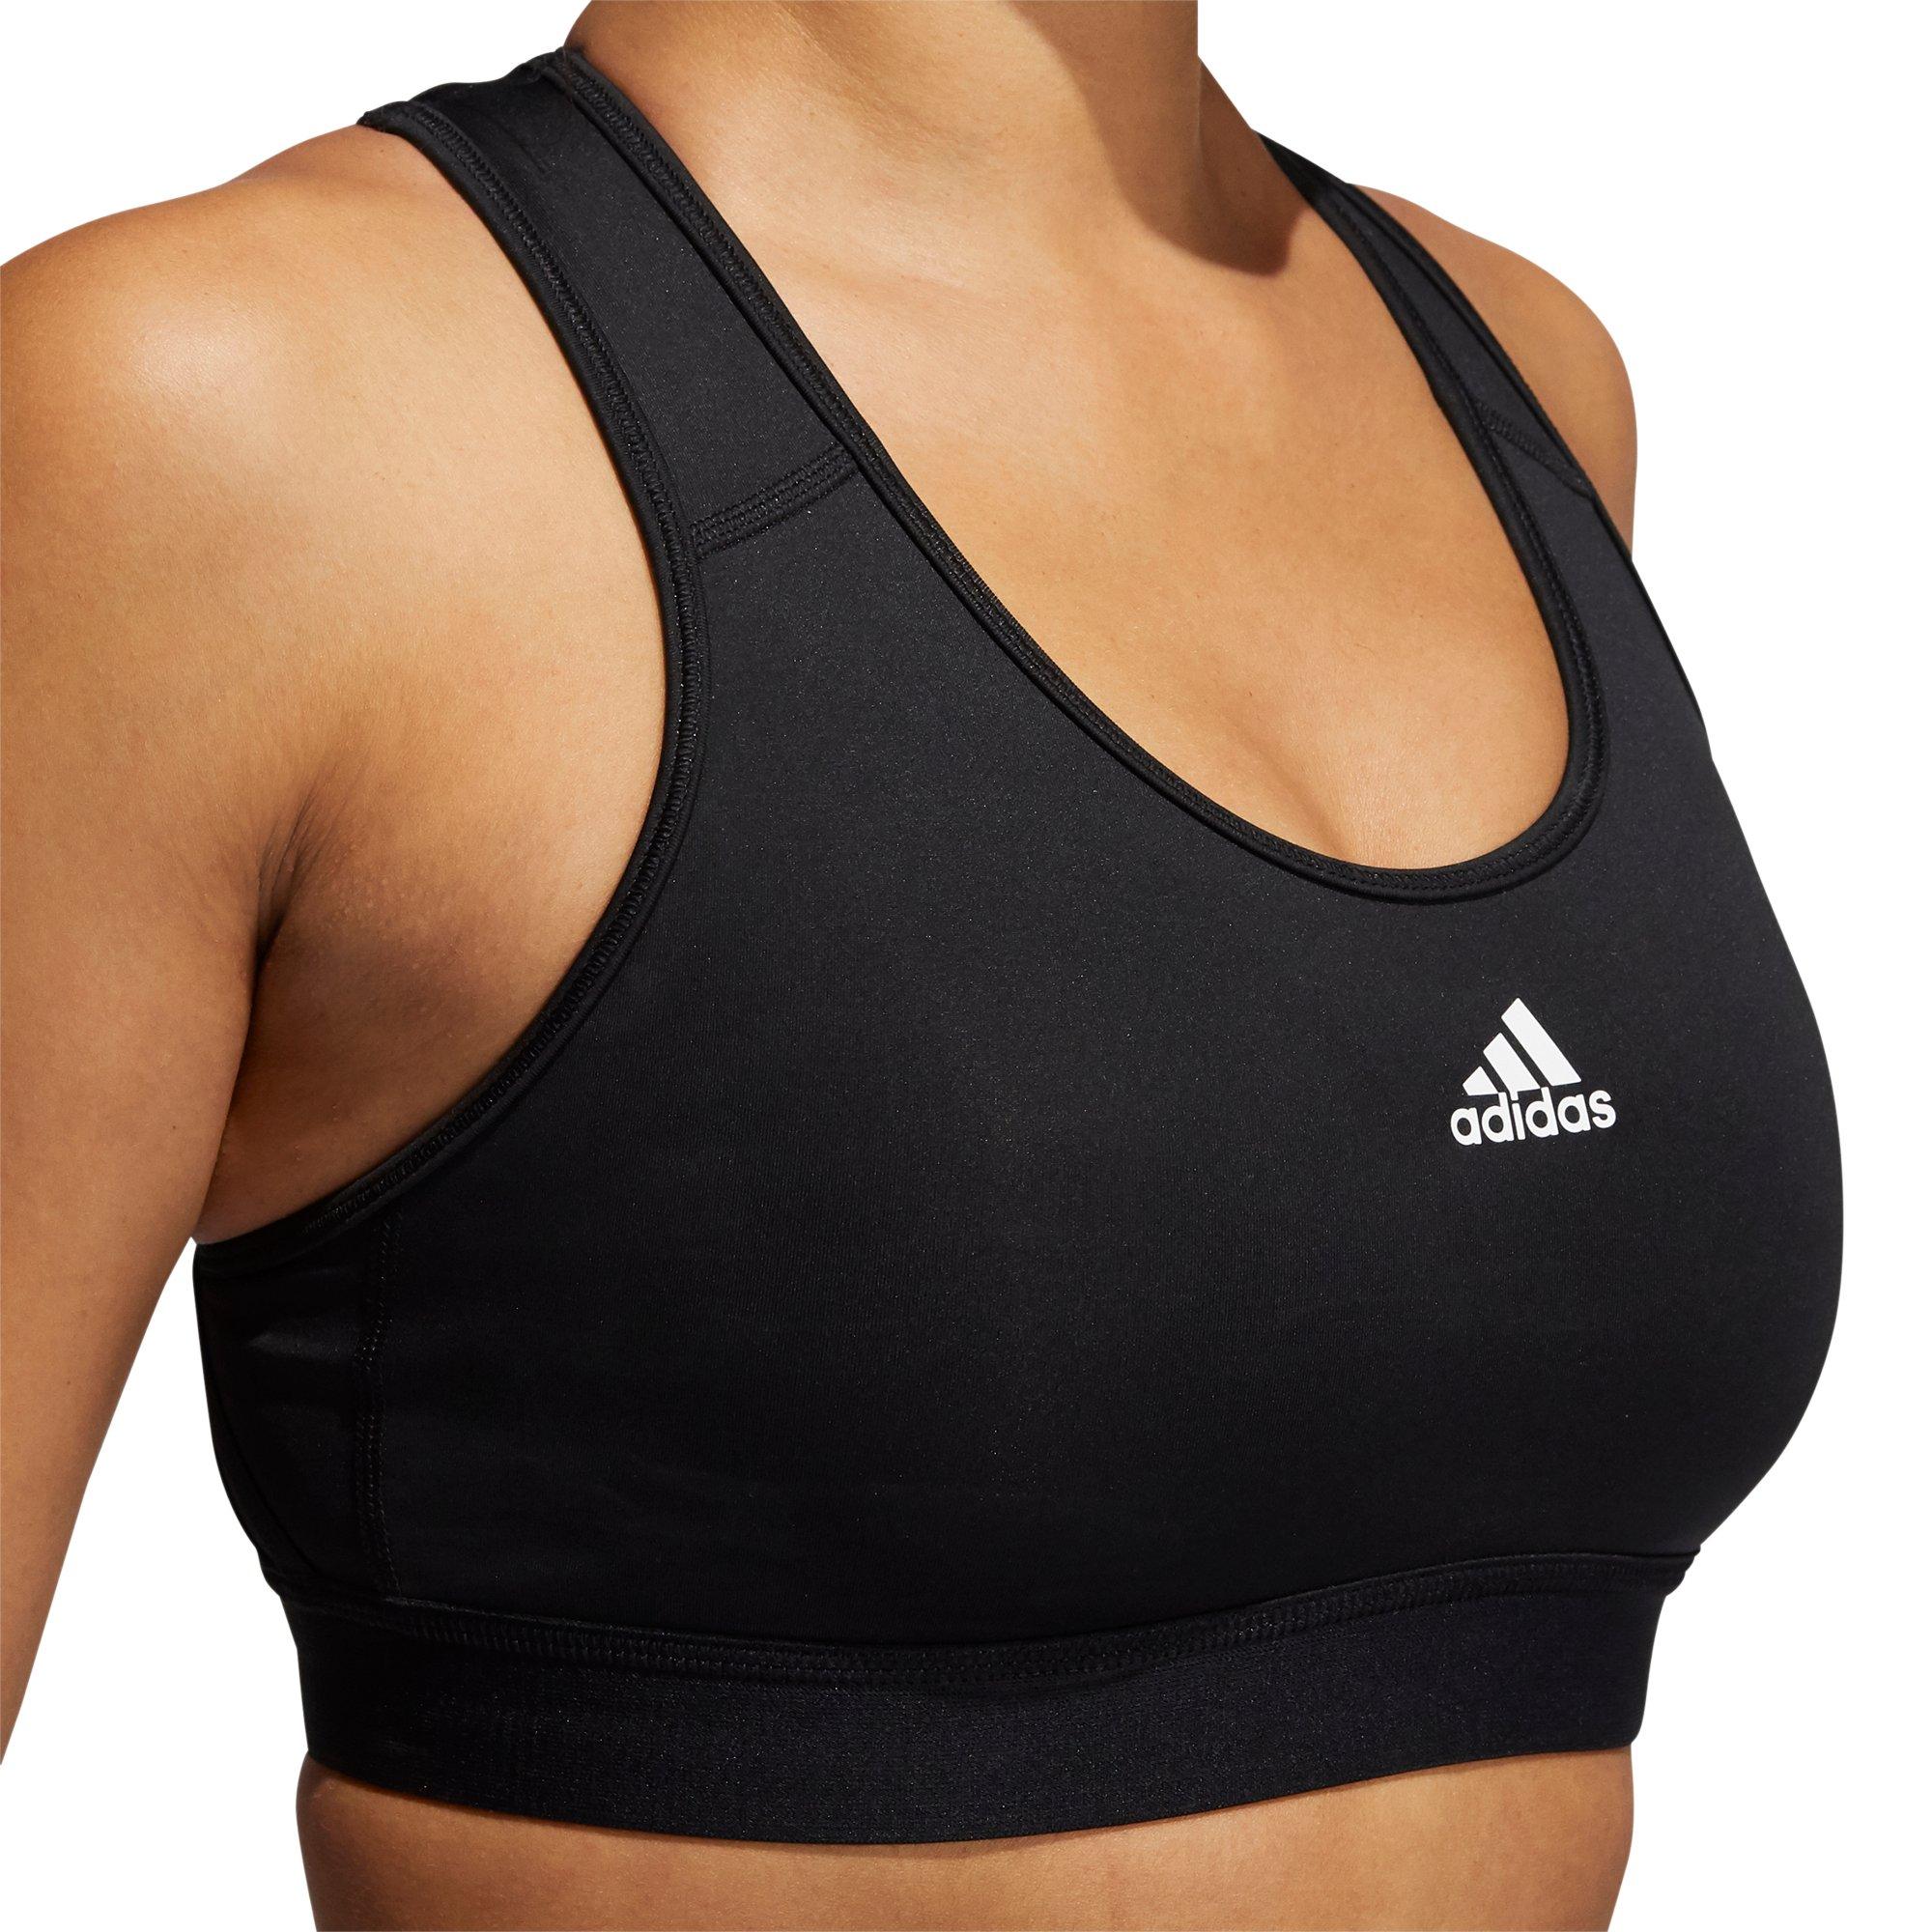 Adidas Womans size Medium Black NWT Tech fit Compression Sports Bra 